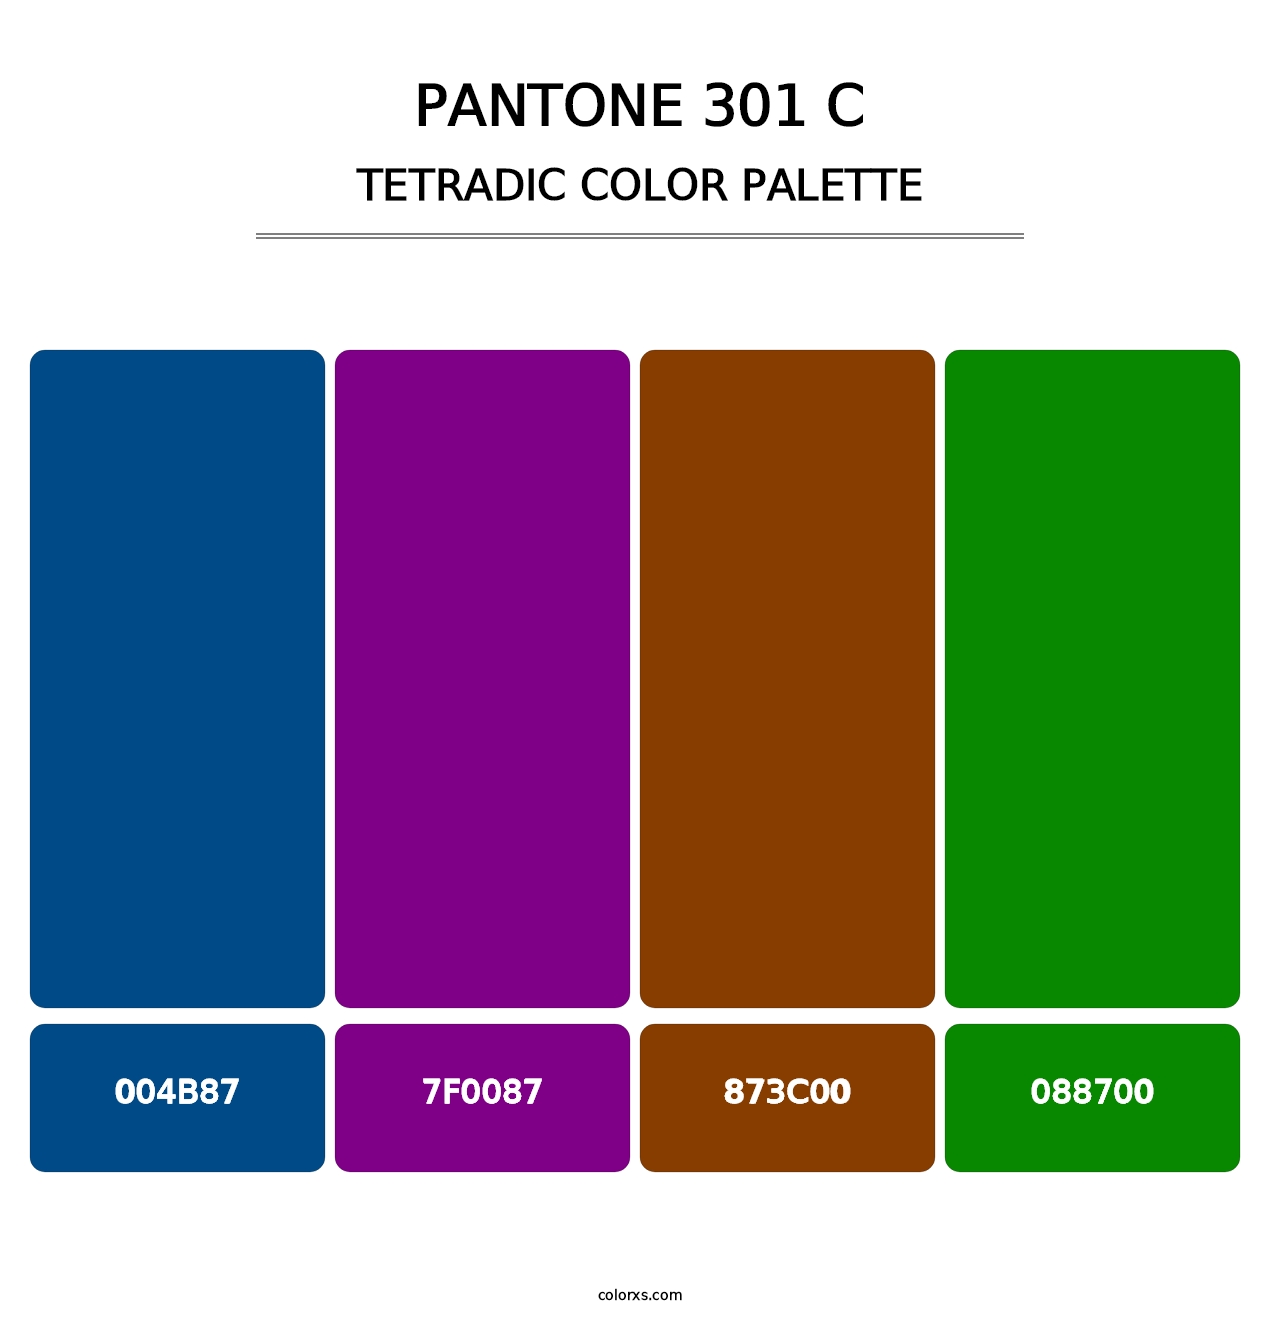 PANTONE 301 C - Tetradic Color Palette